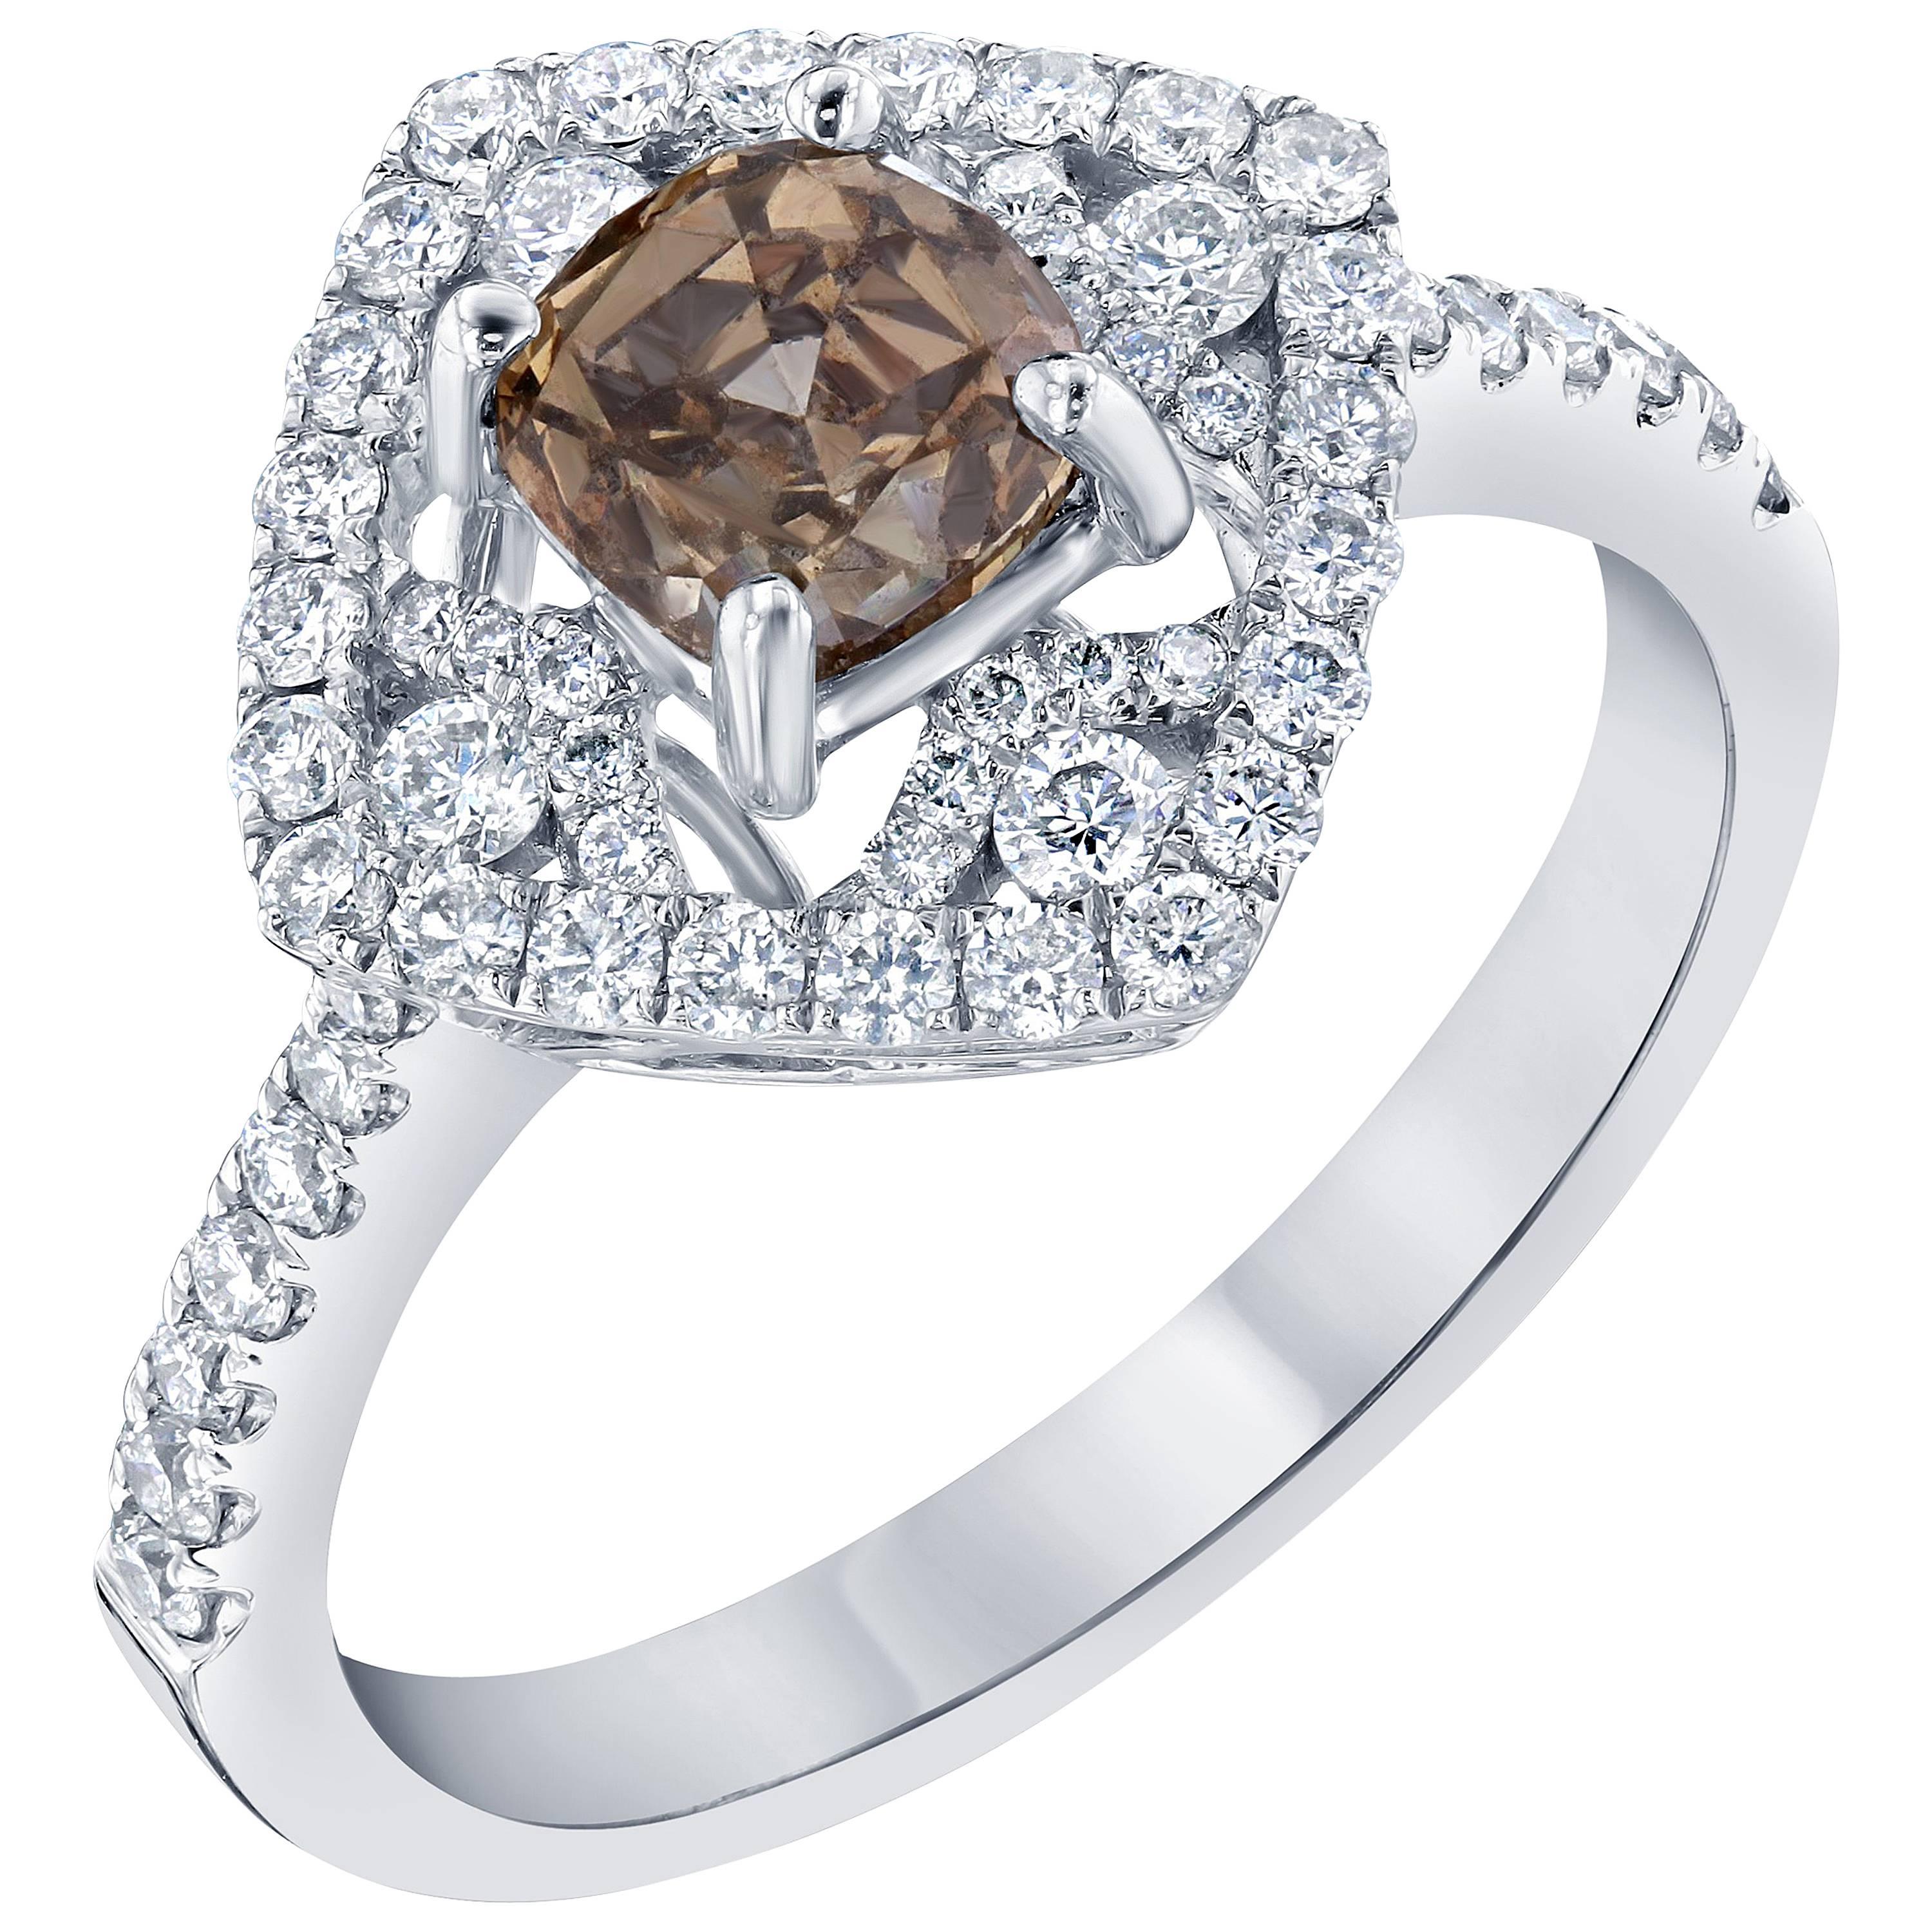 1.63 Carat Fancy Diamond Engagement Ring